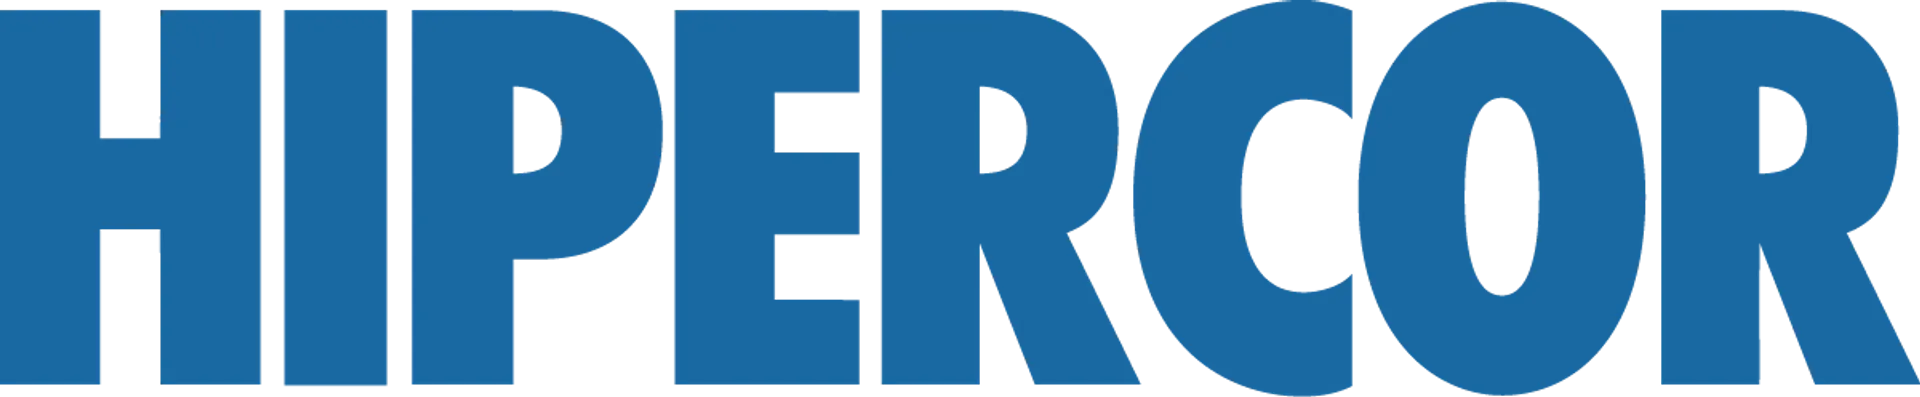 HIPERCOR logo